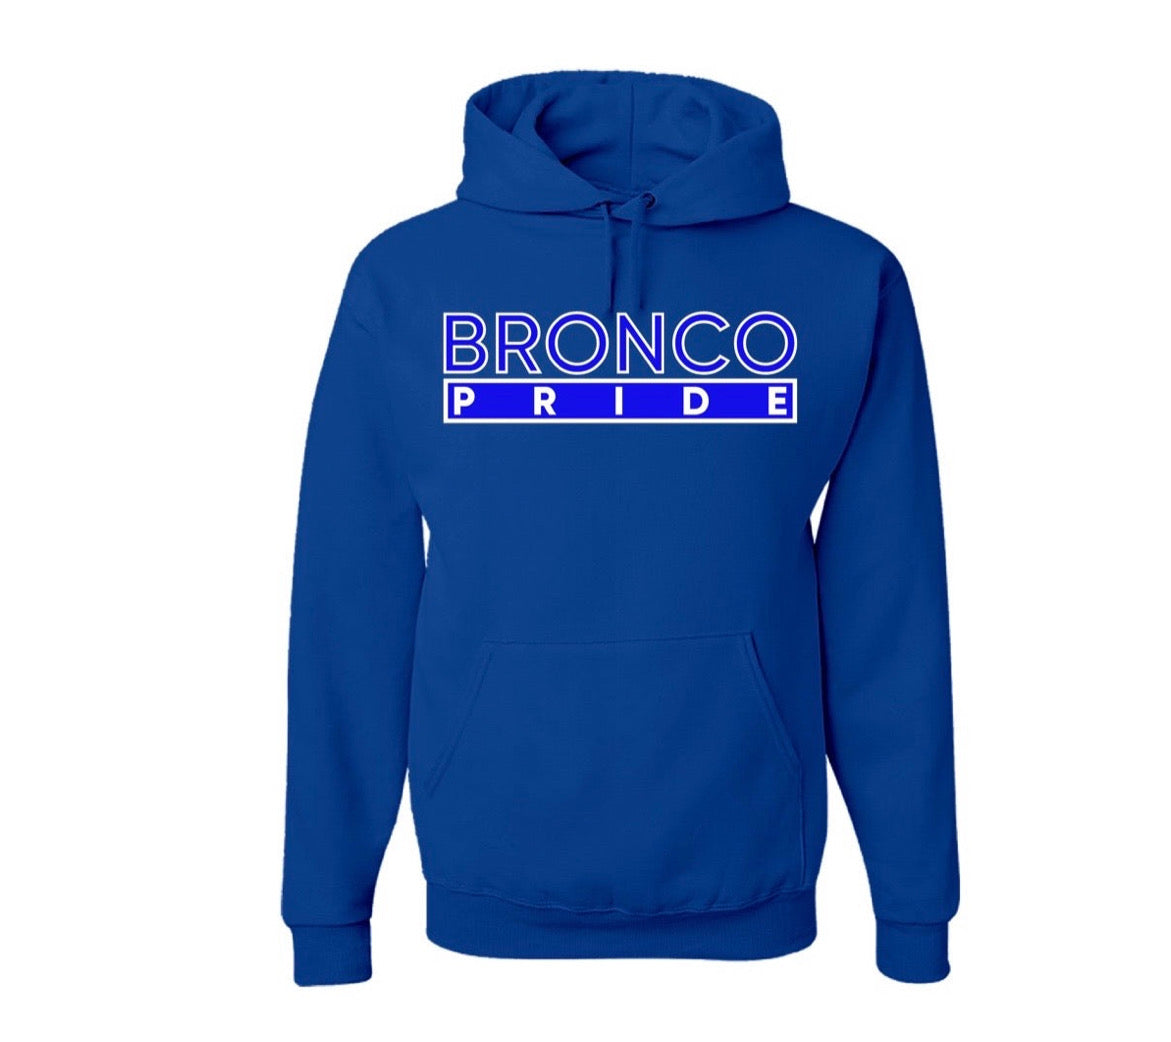 The “Bronco Pride” Hoodie/Crew in Royal Blue/White (NC)